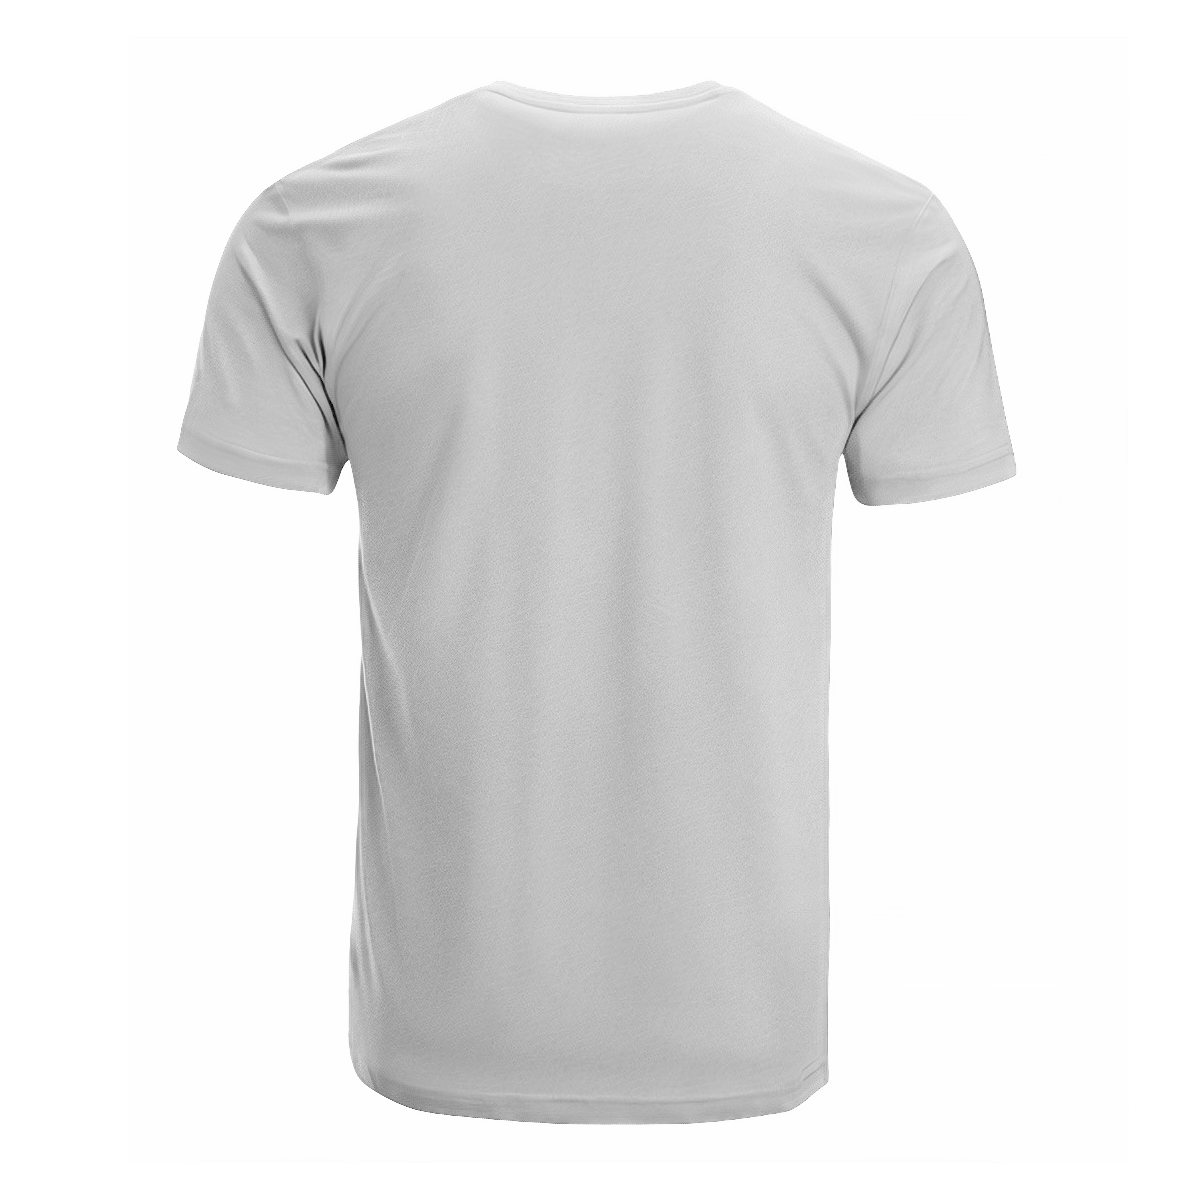 Hope Tartan Crest T-shirt - I'm not yelling style